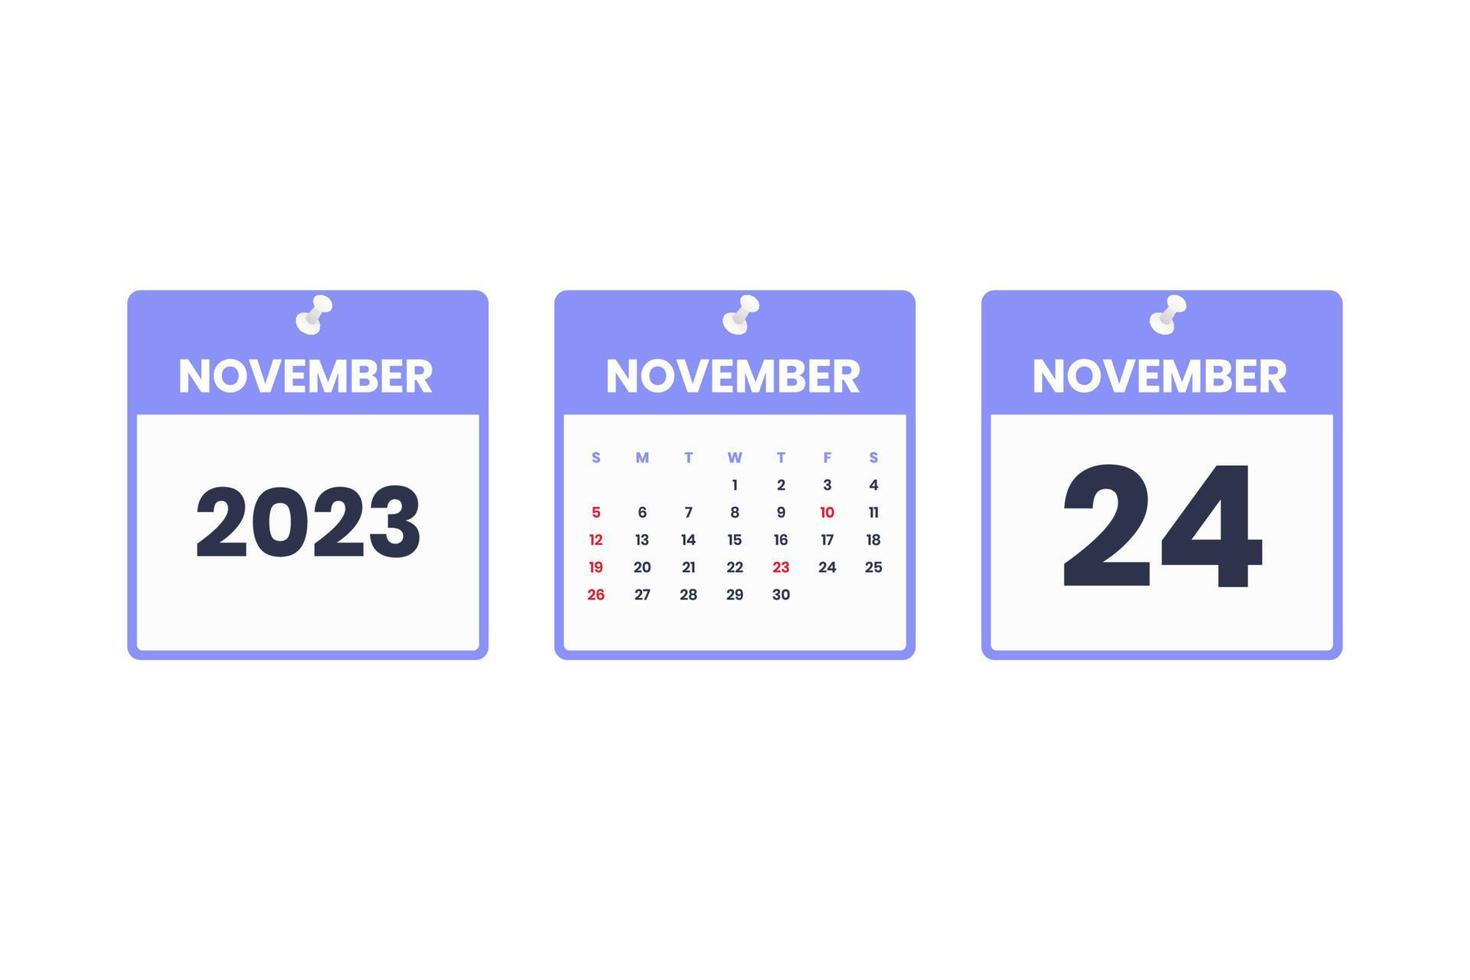 November calendar design. November 24 2023 calendar icon for schedule, appointment, important date concept vector